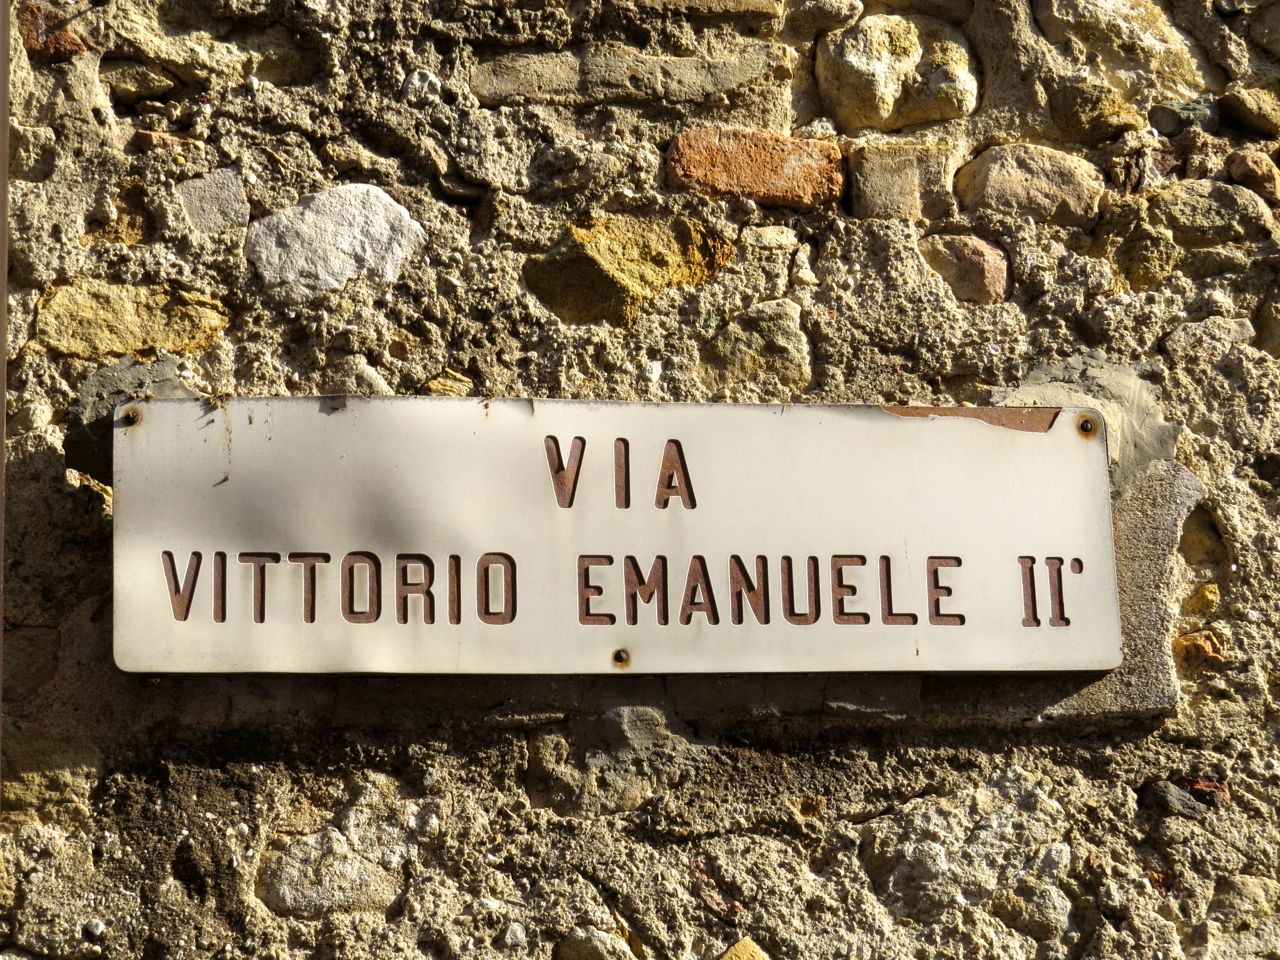 Corso Vittorio Emanuele II